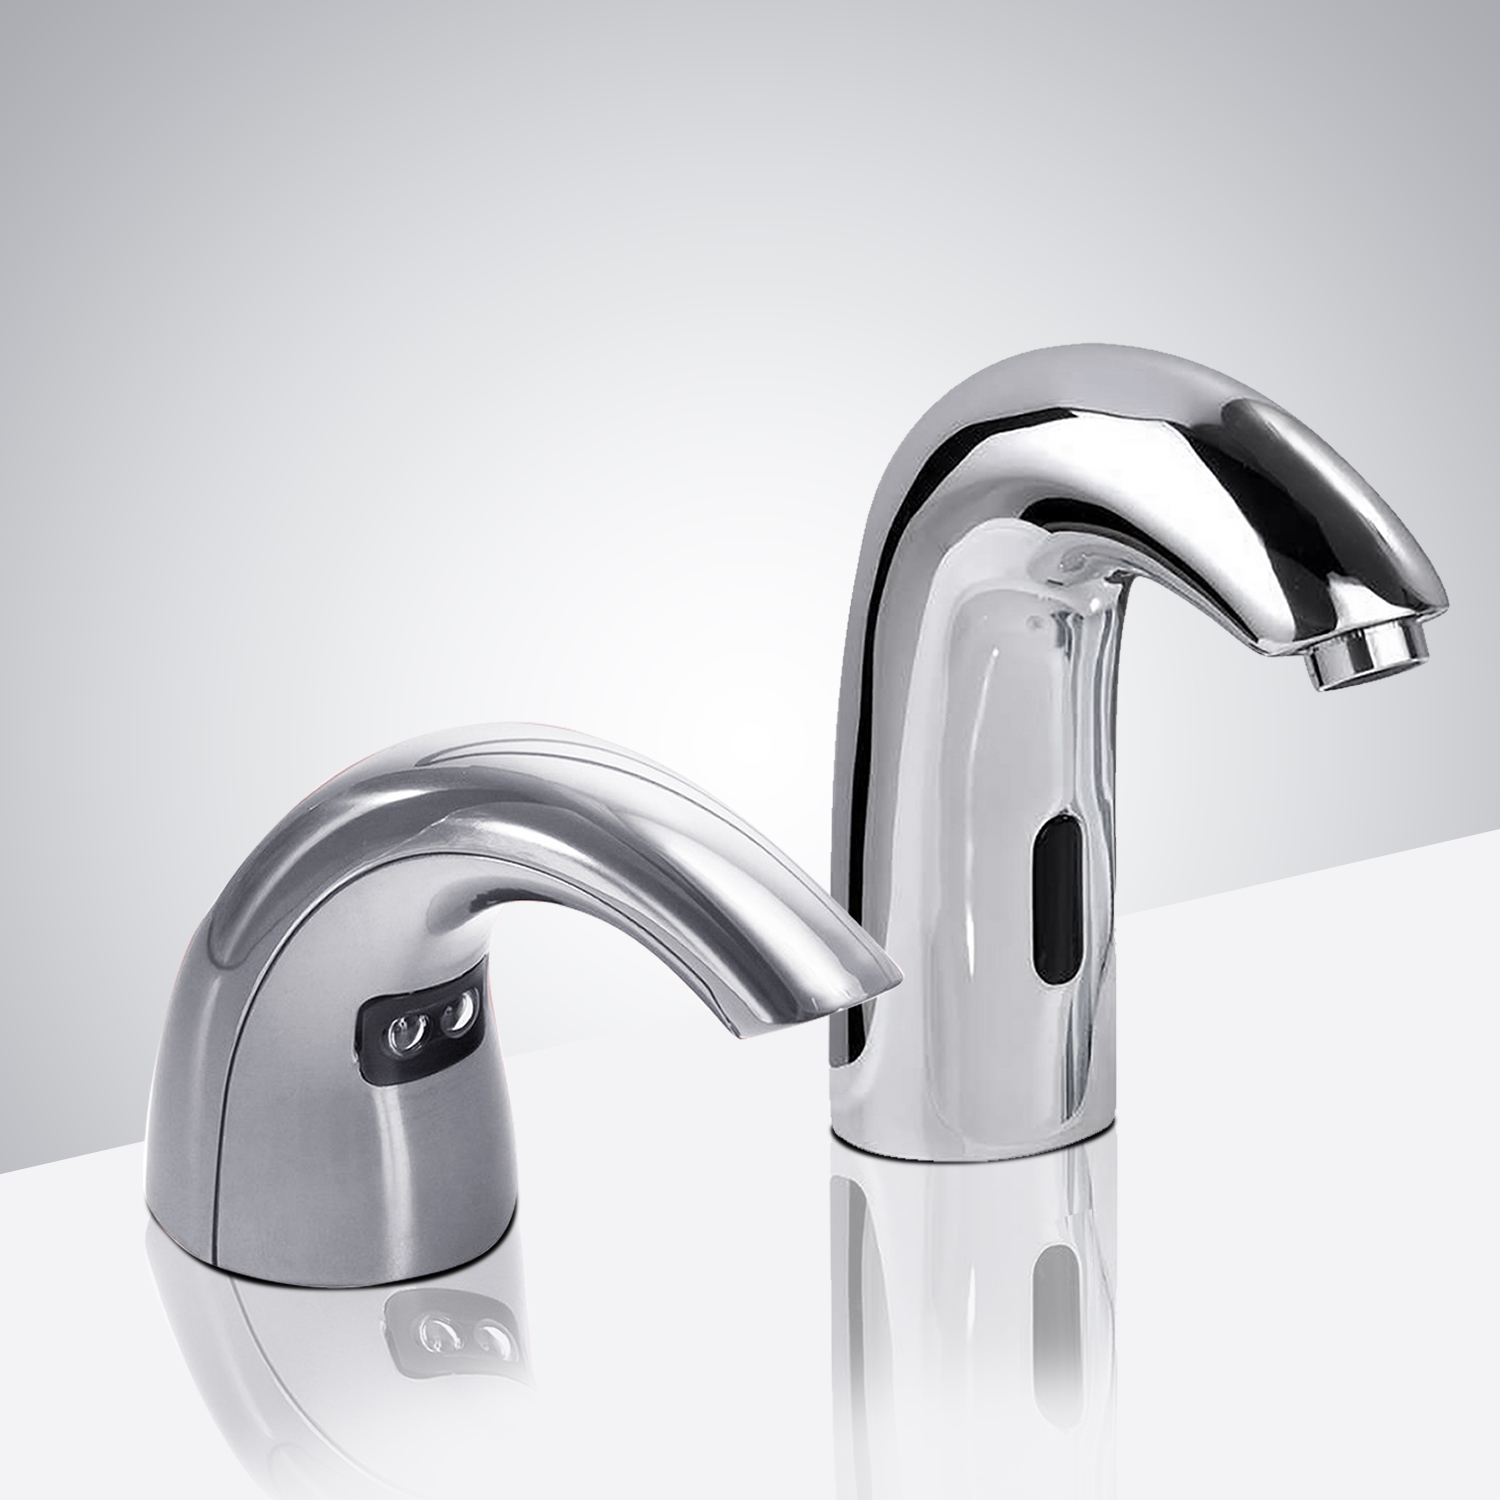 DUPLICATE Fontana Dax Motion Sensor Faucet & Automatic Soap Dispenser for Restrooms